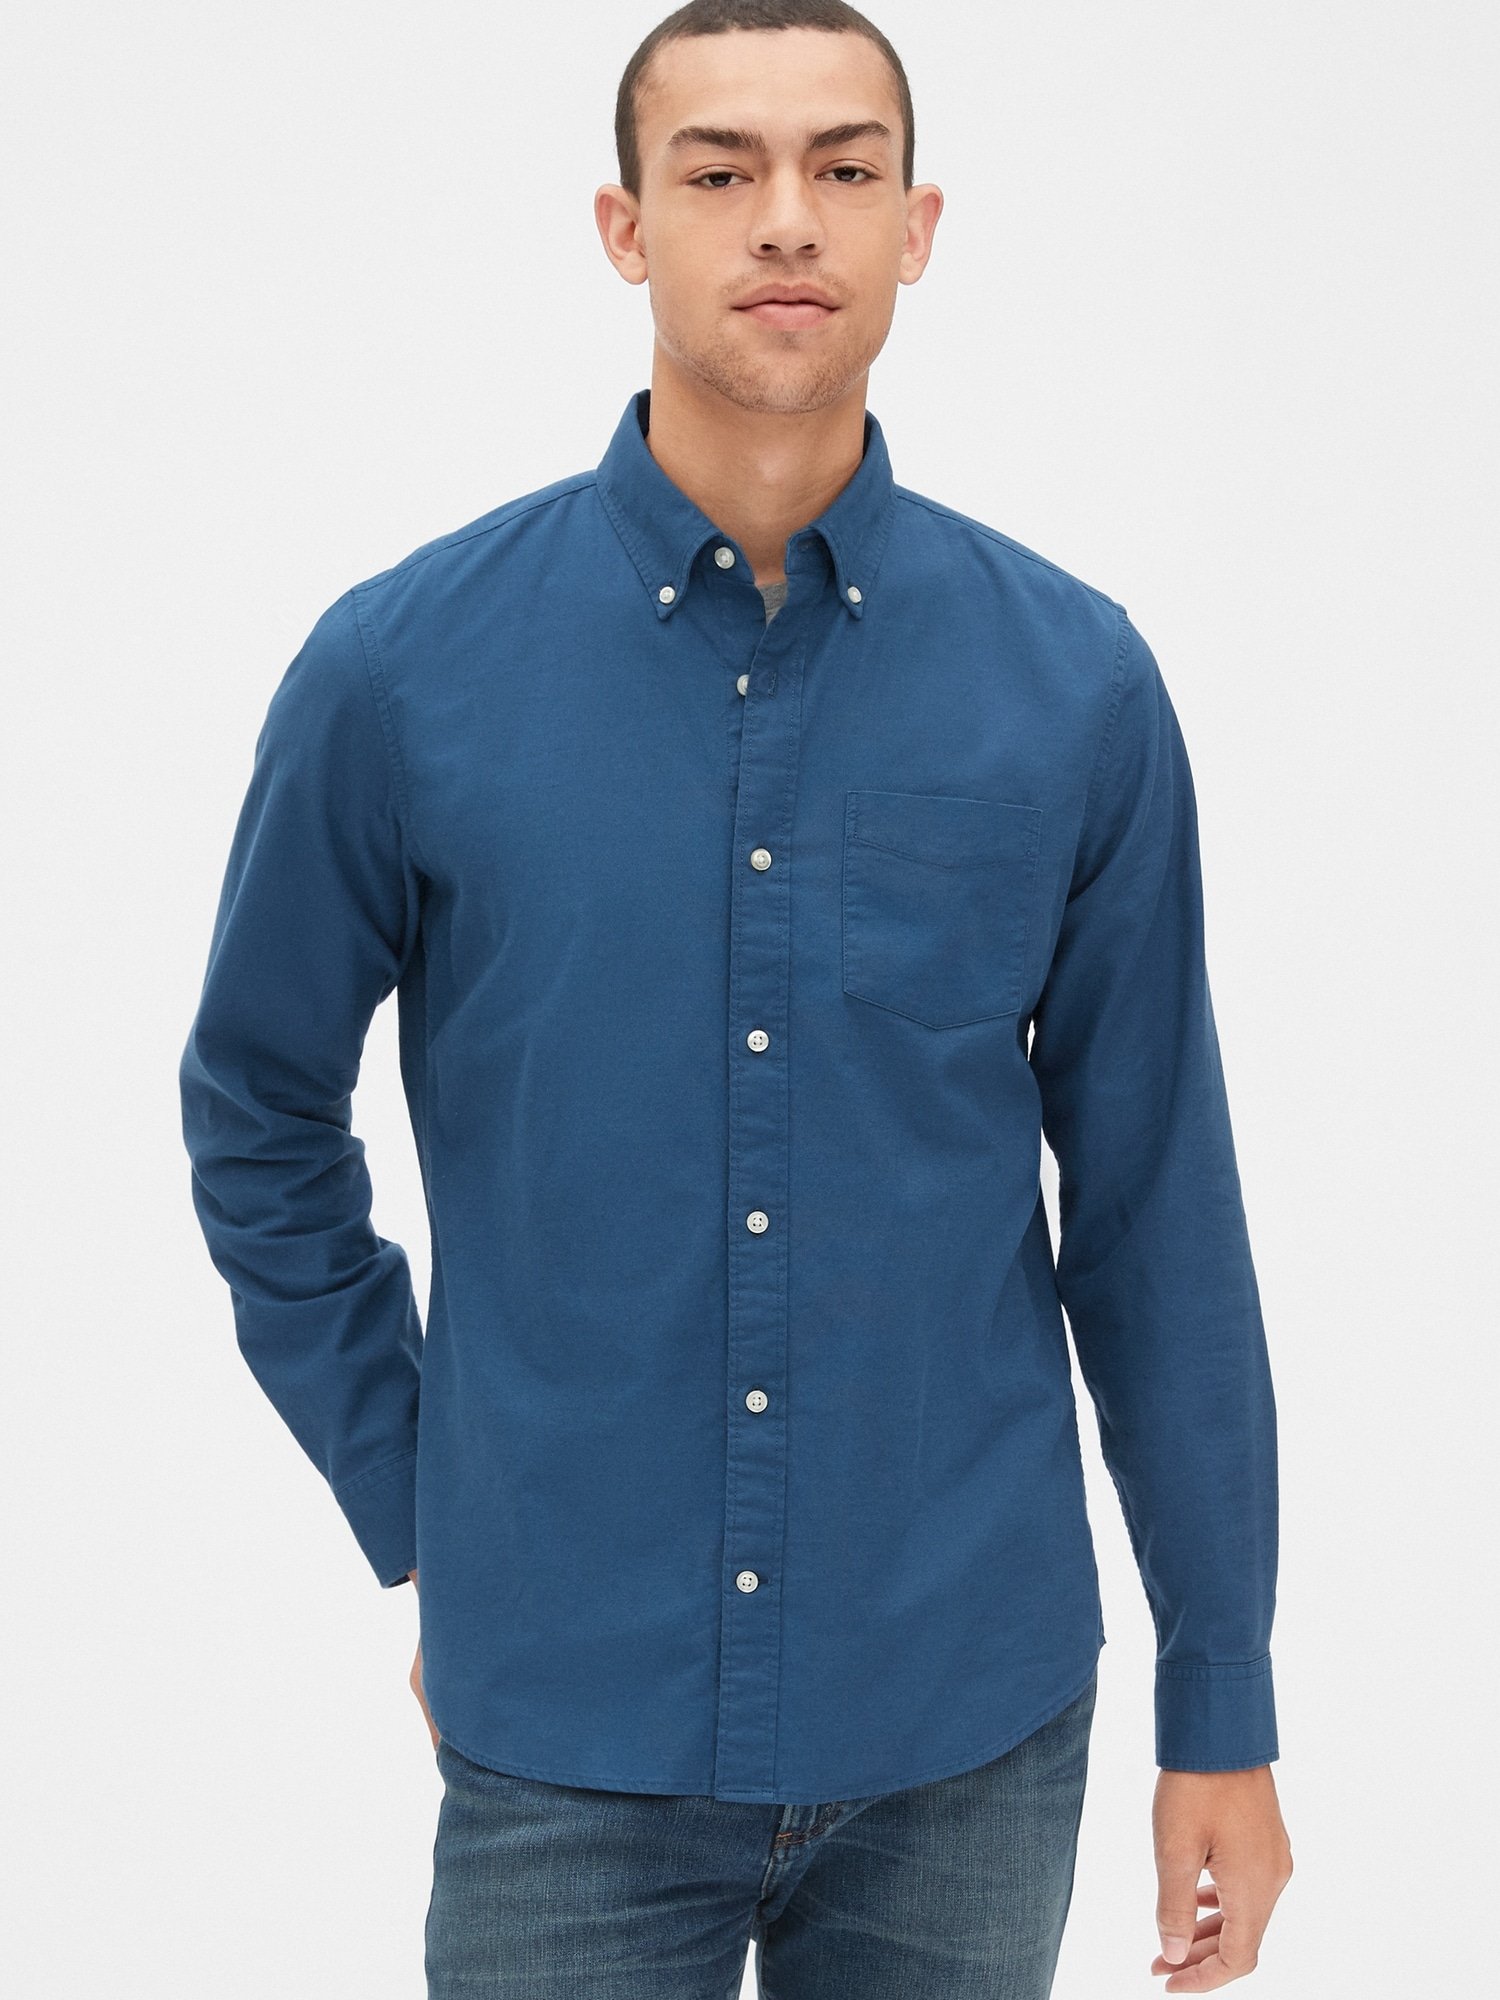 Erkek Streç Oxford Gömlek product image